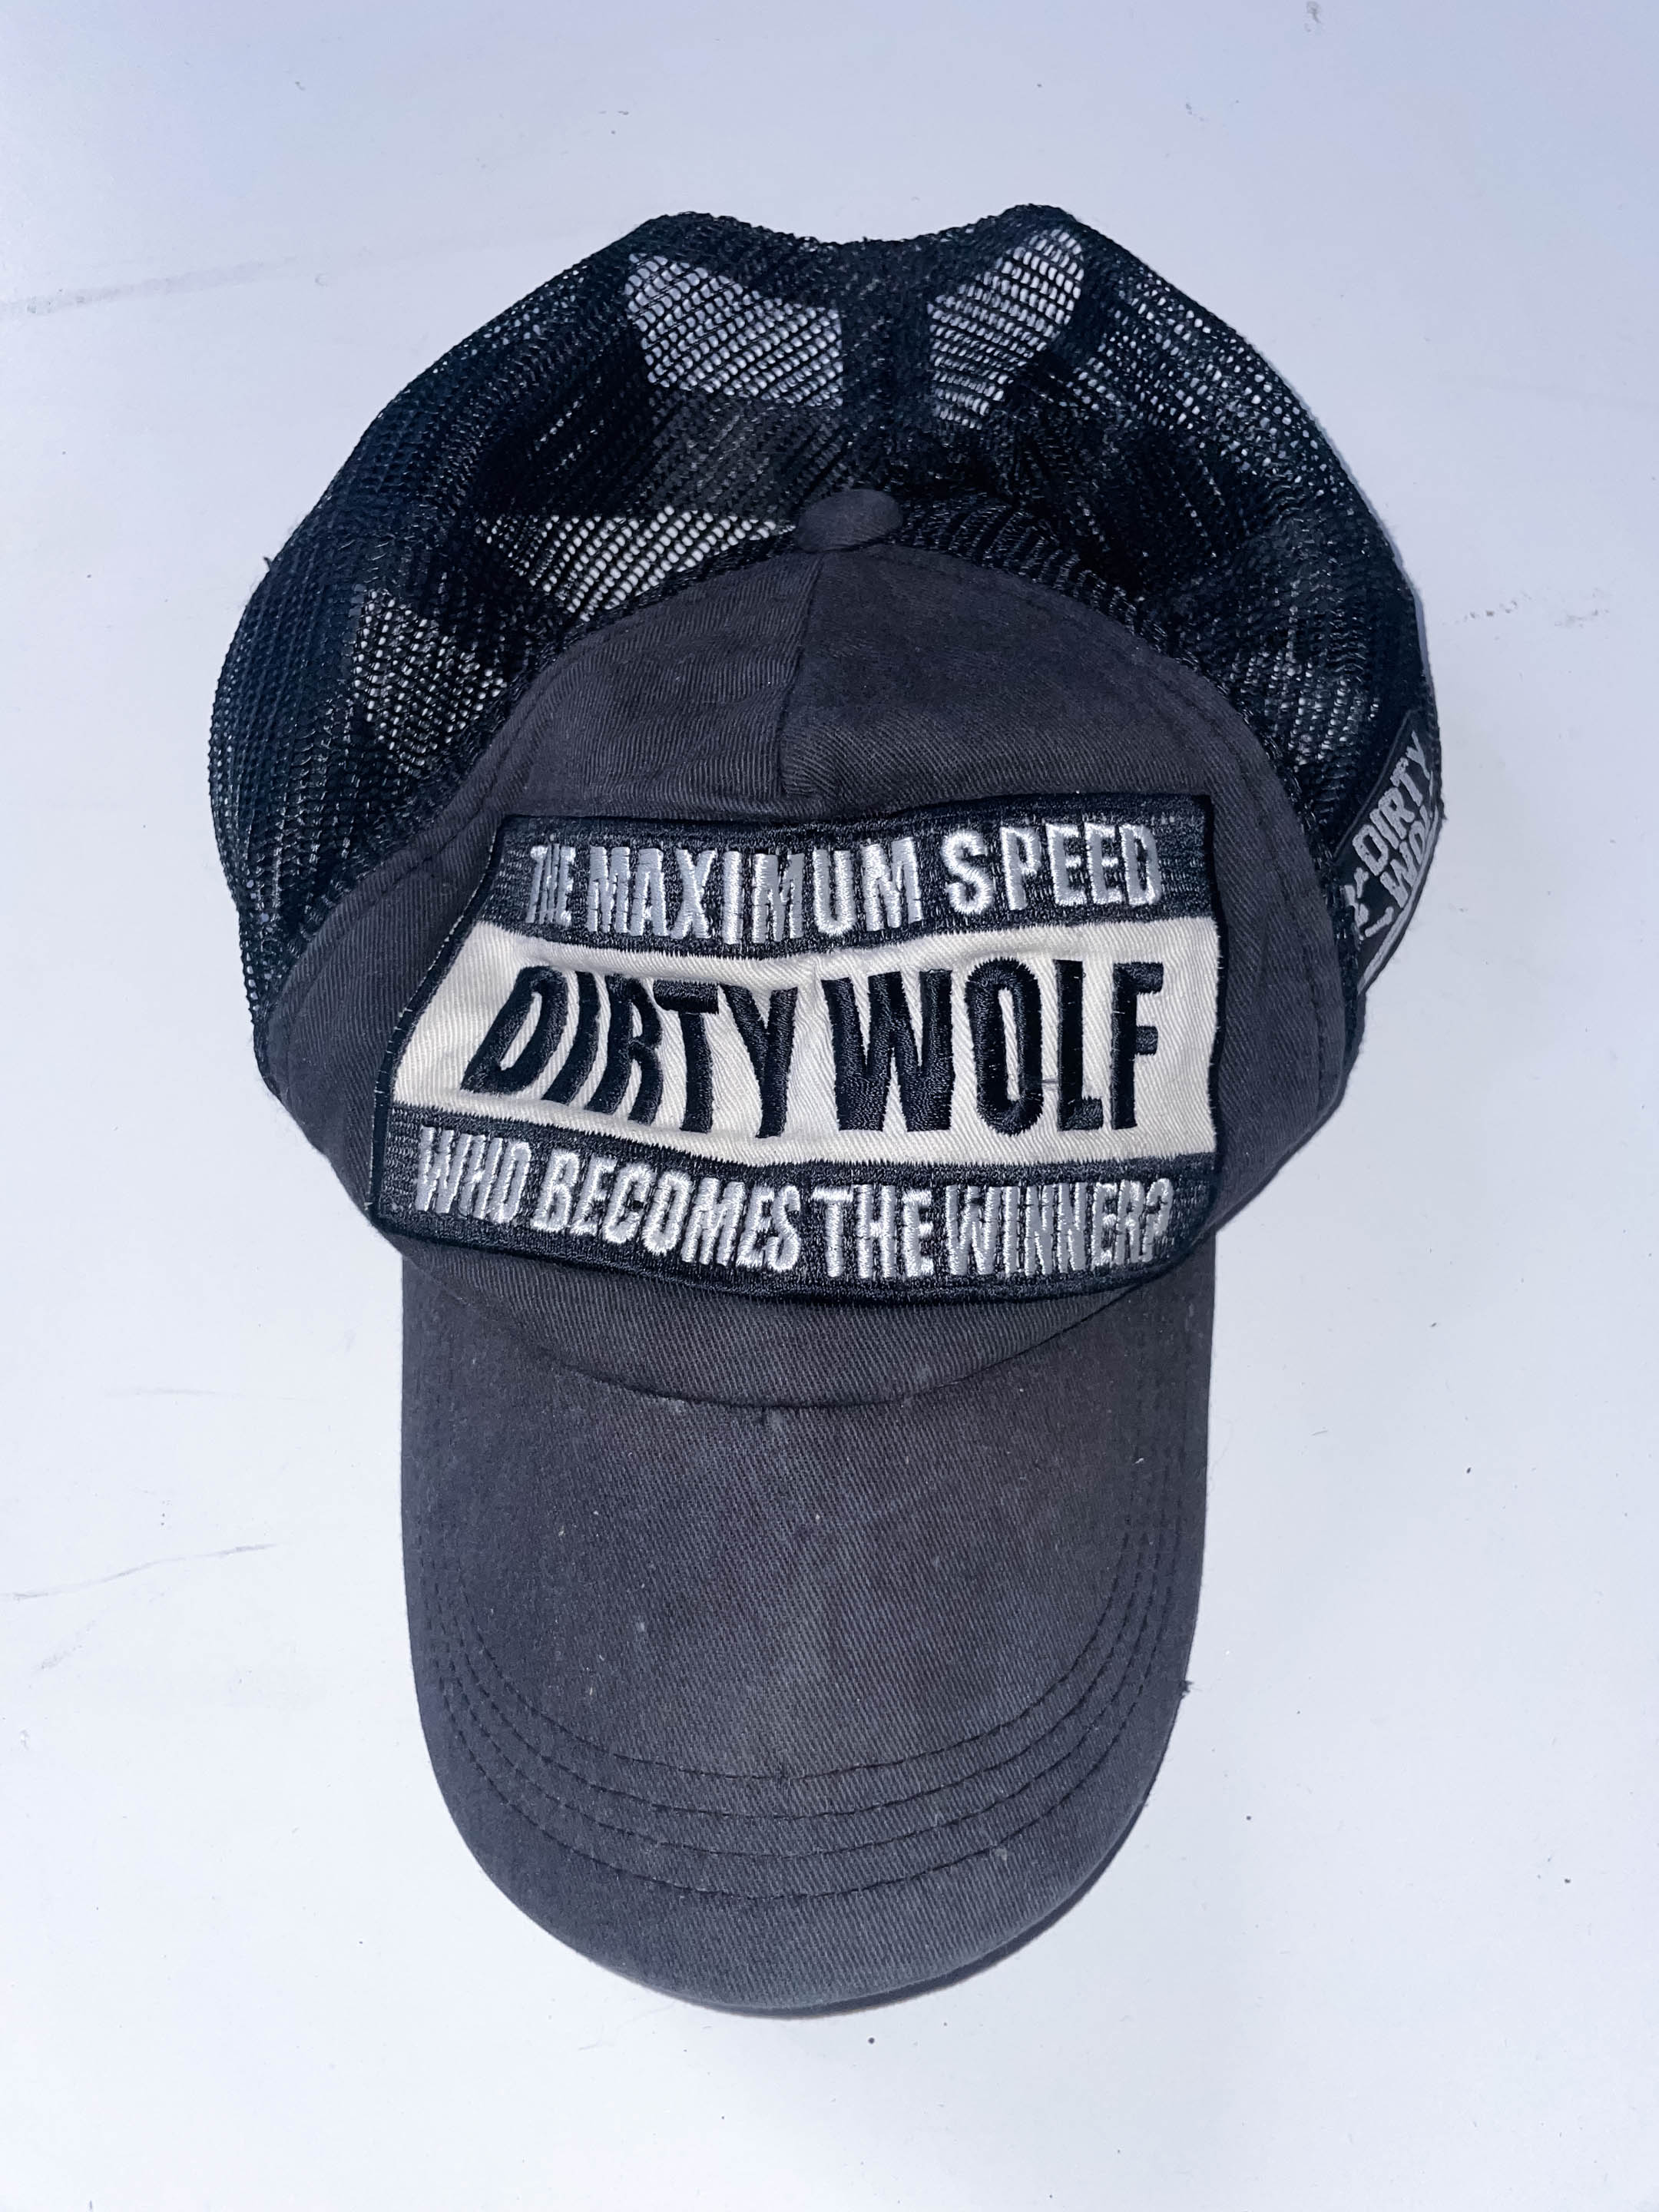 Vintage Dirty Wolf printed black baseball cap